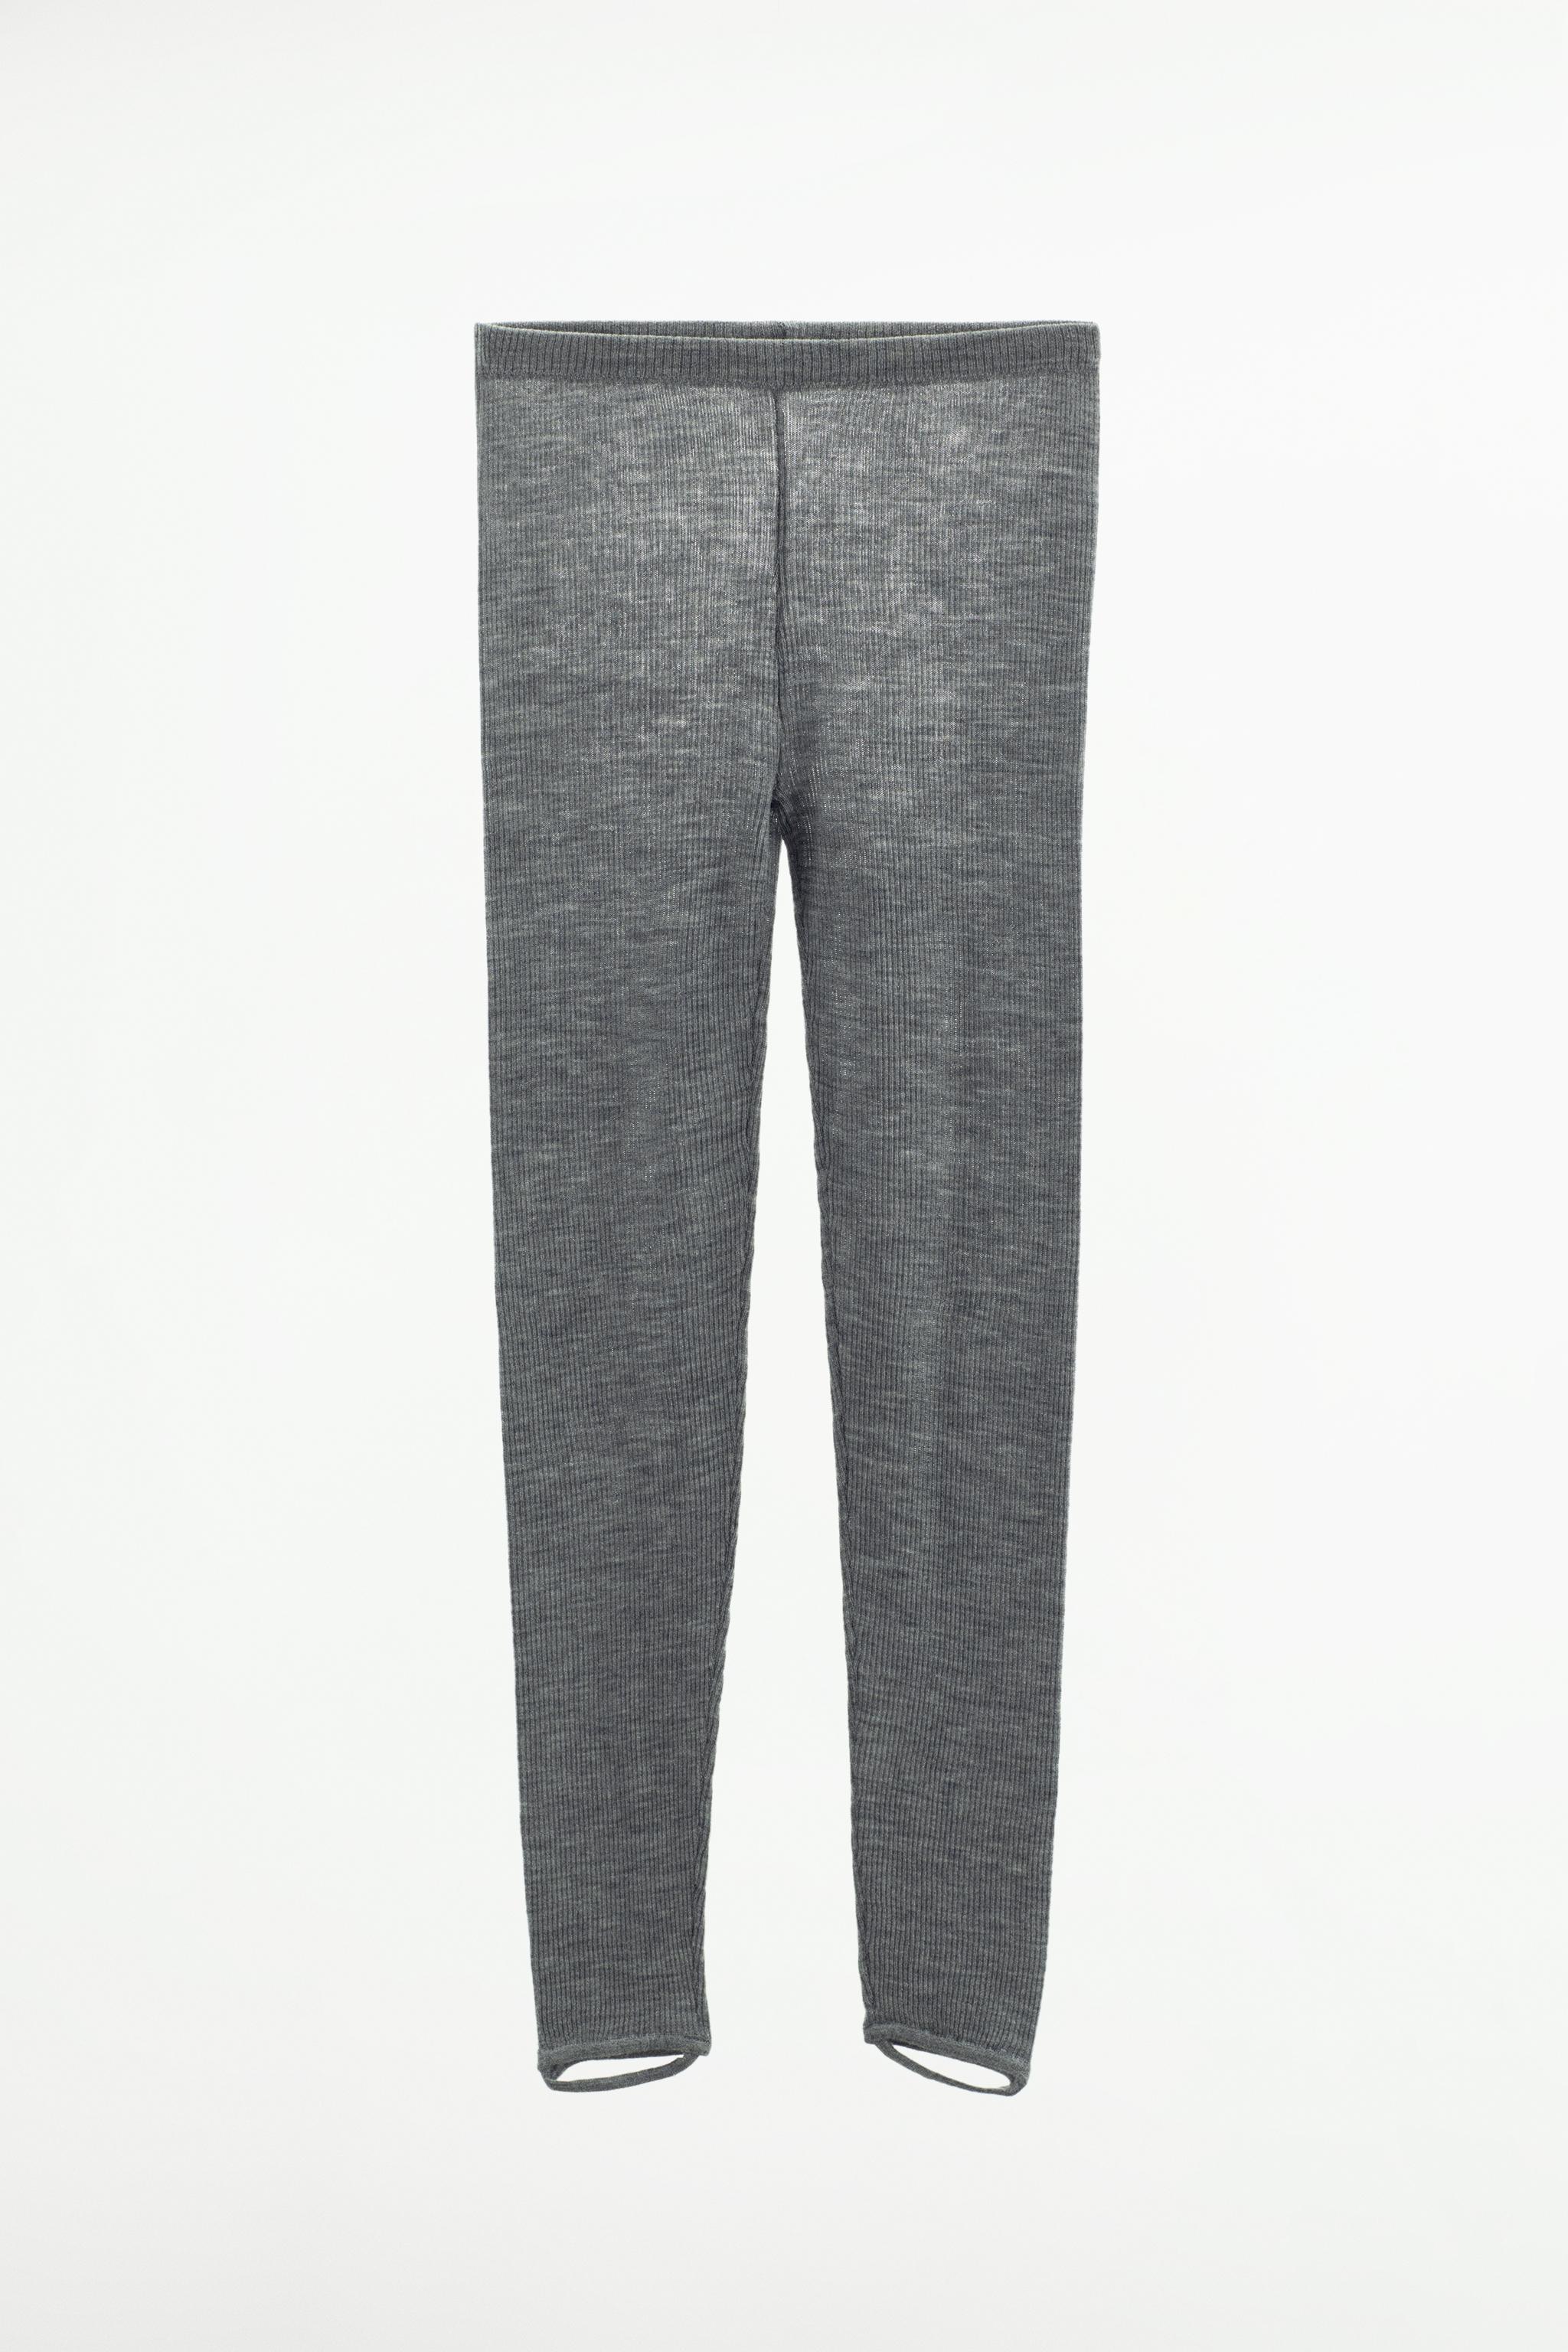 Zara Women's Ribbed Stirrup Silver Grey Pull On Pants Leggings L